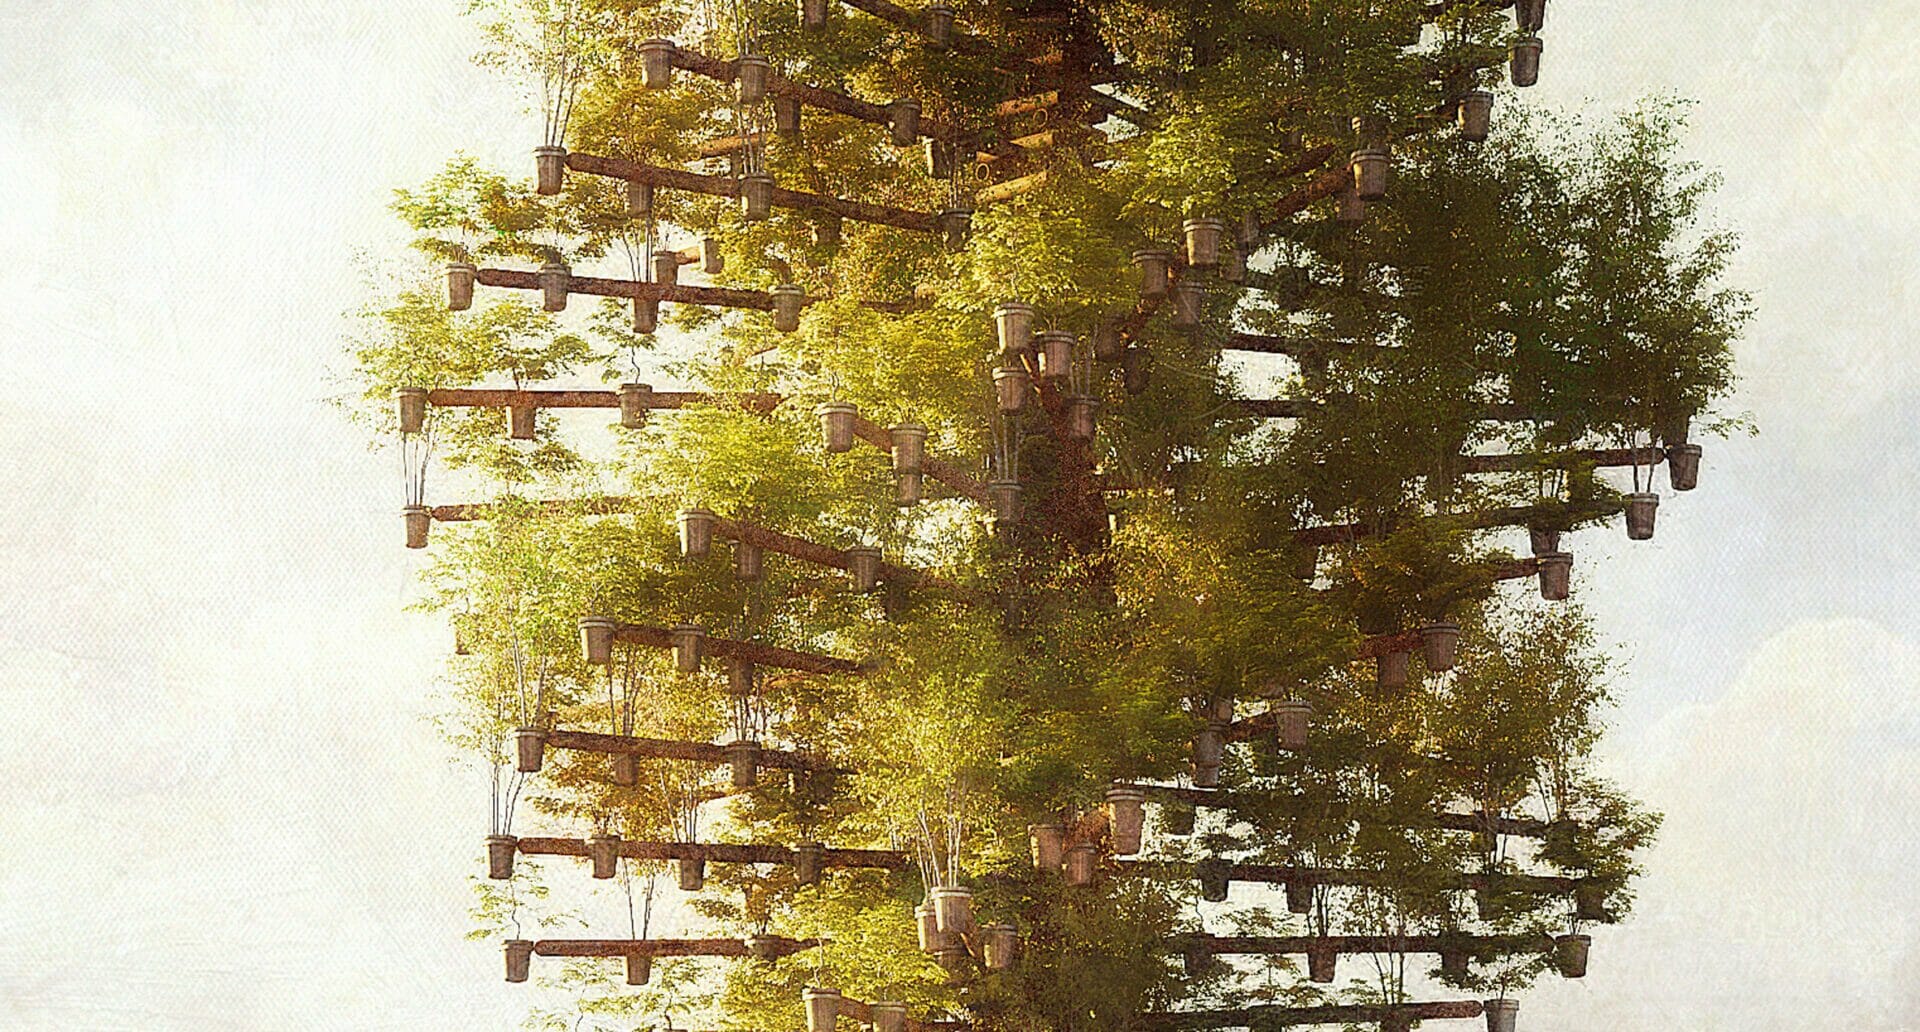 Tree of Trees